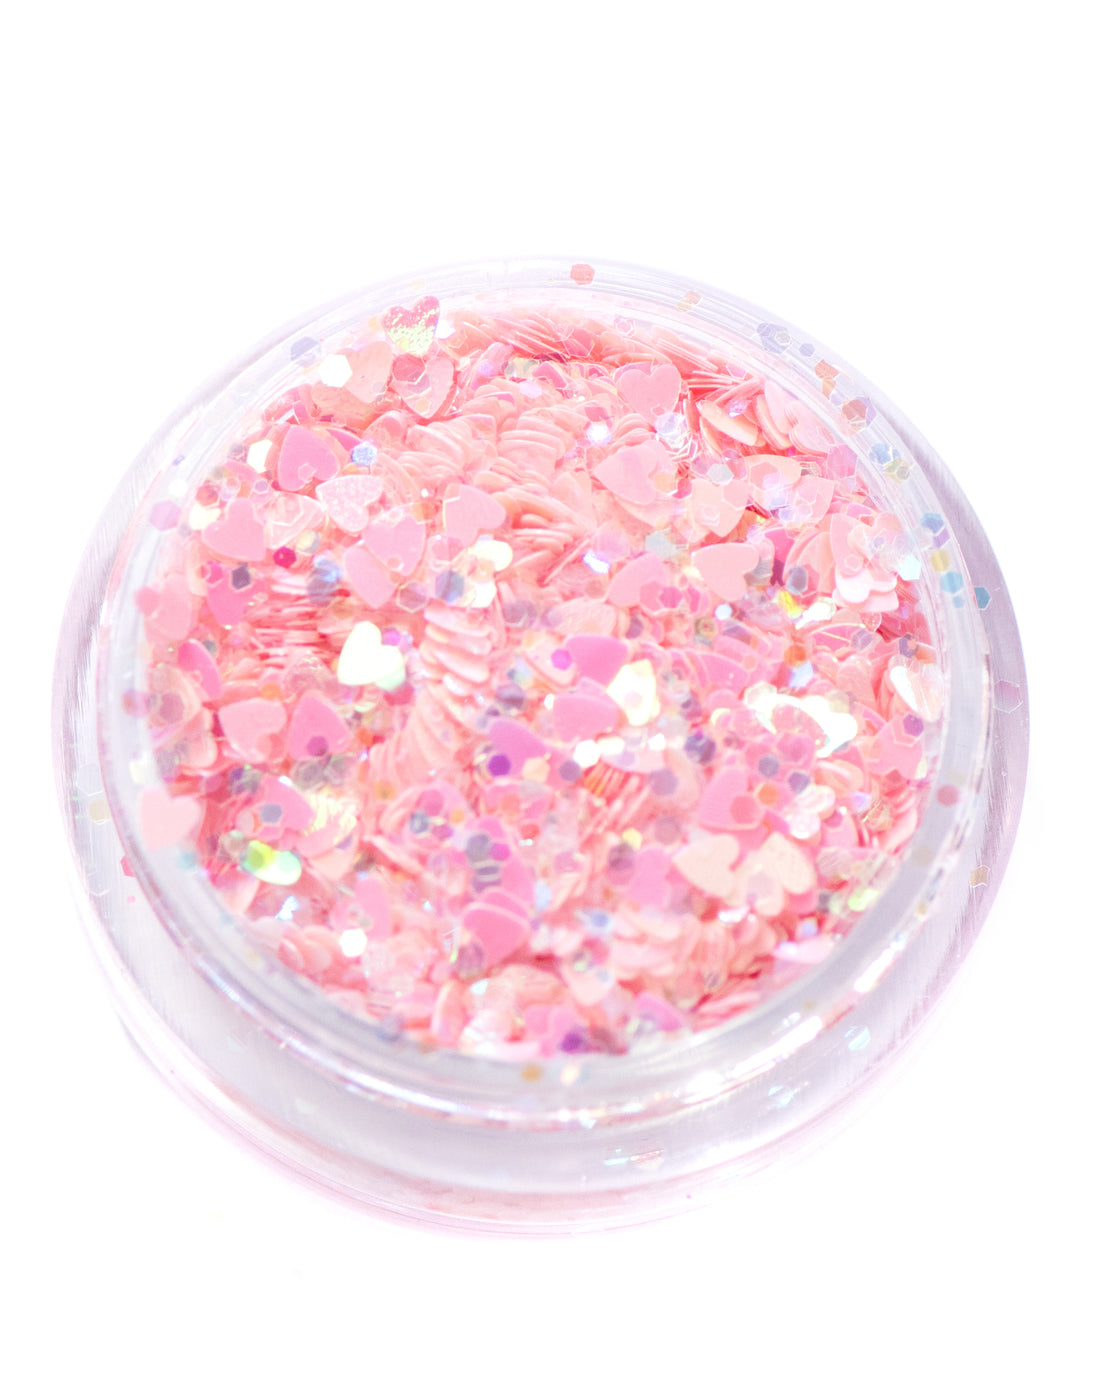 Love Struck - Baby Pink Iridescent Heart Shaped Glitter Mix - Lunautics Chunky Glitter